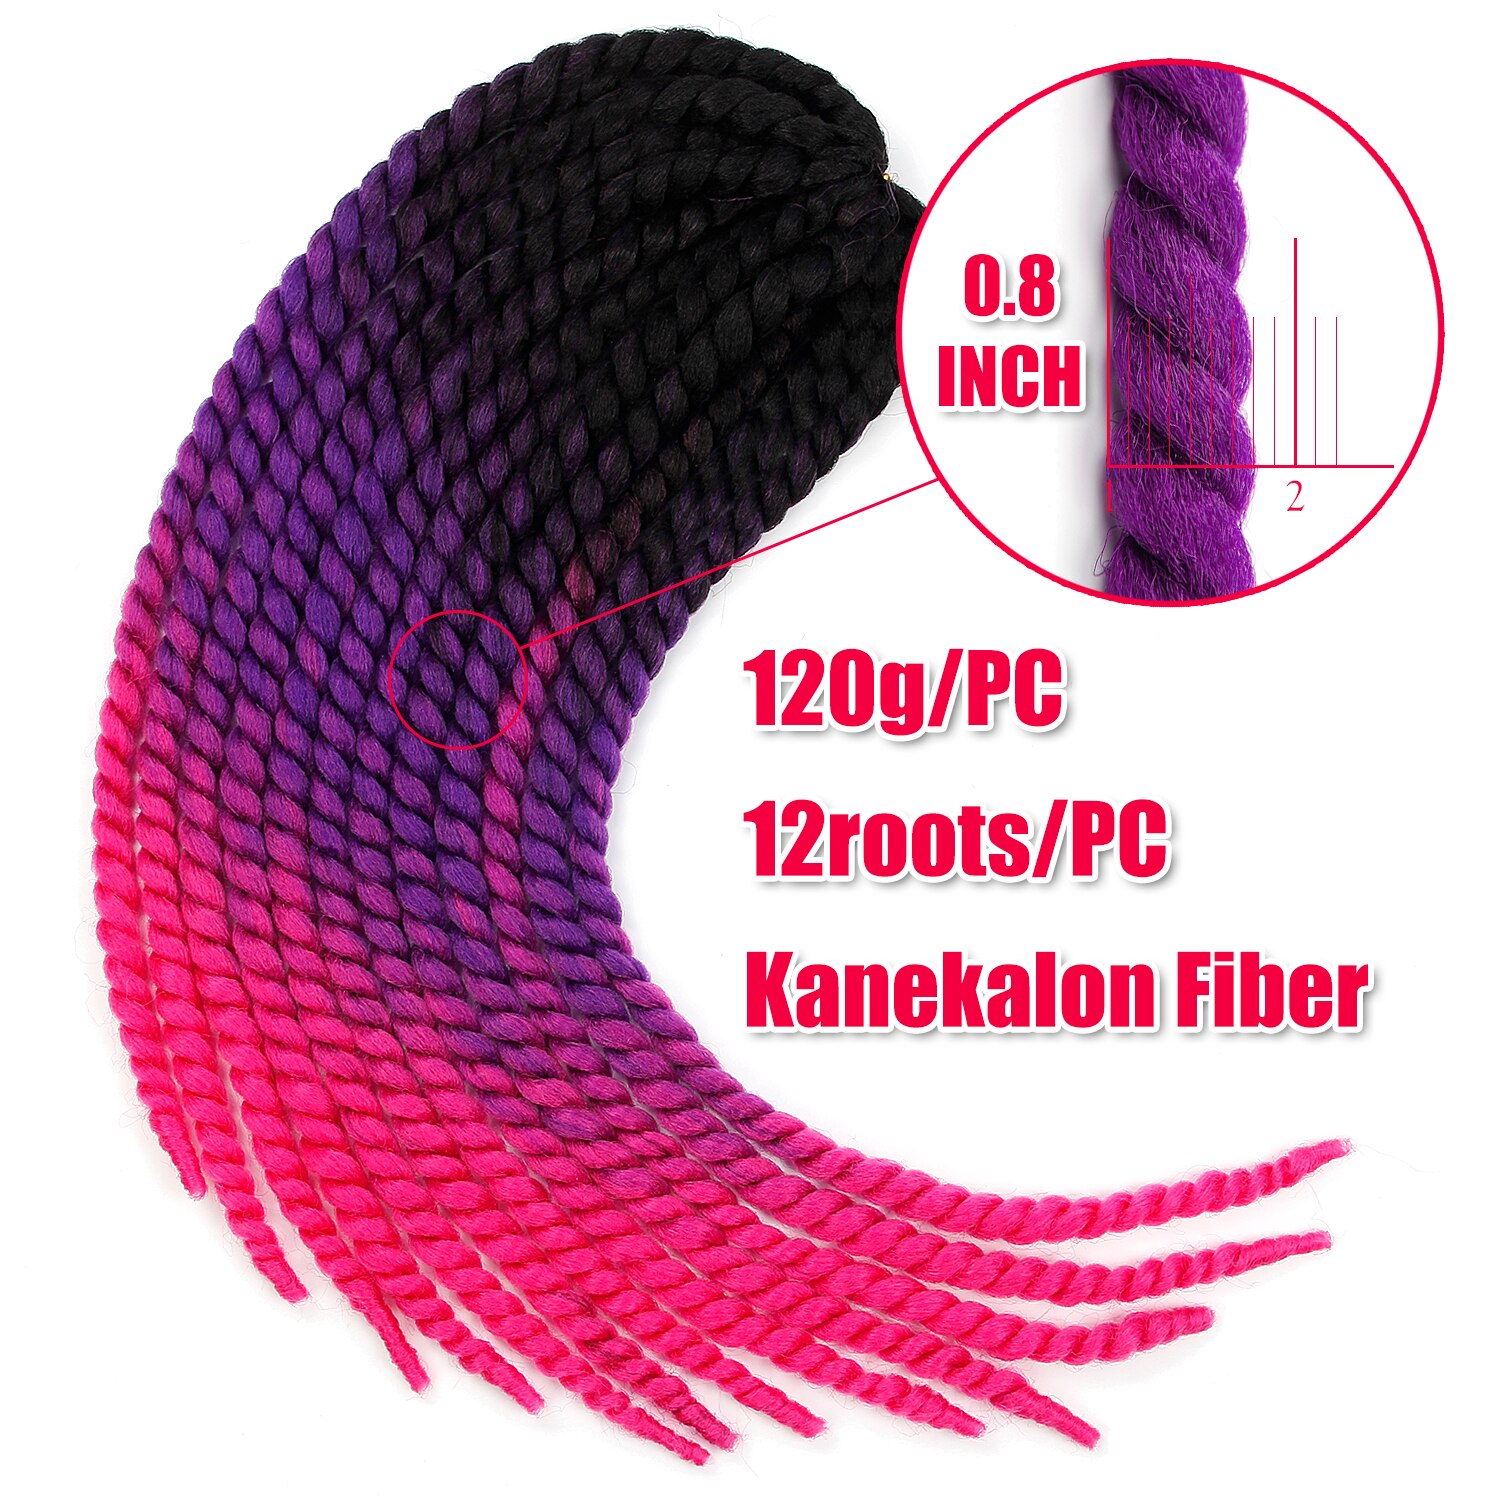 YxCheris Mambo Twist Hair Jumbo Crochet Braids 22'' 120g 20 Color Ombre Synthetic Crochet Hair Braiding Hair Purple